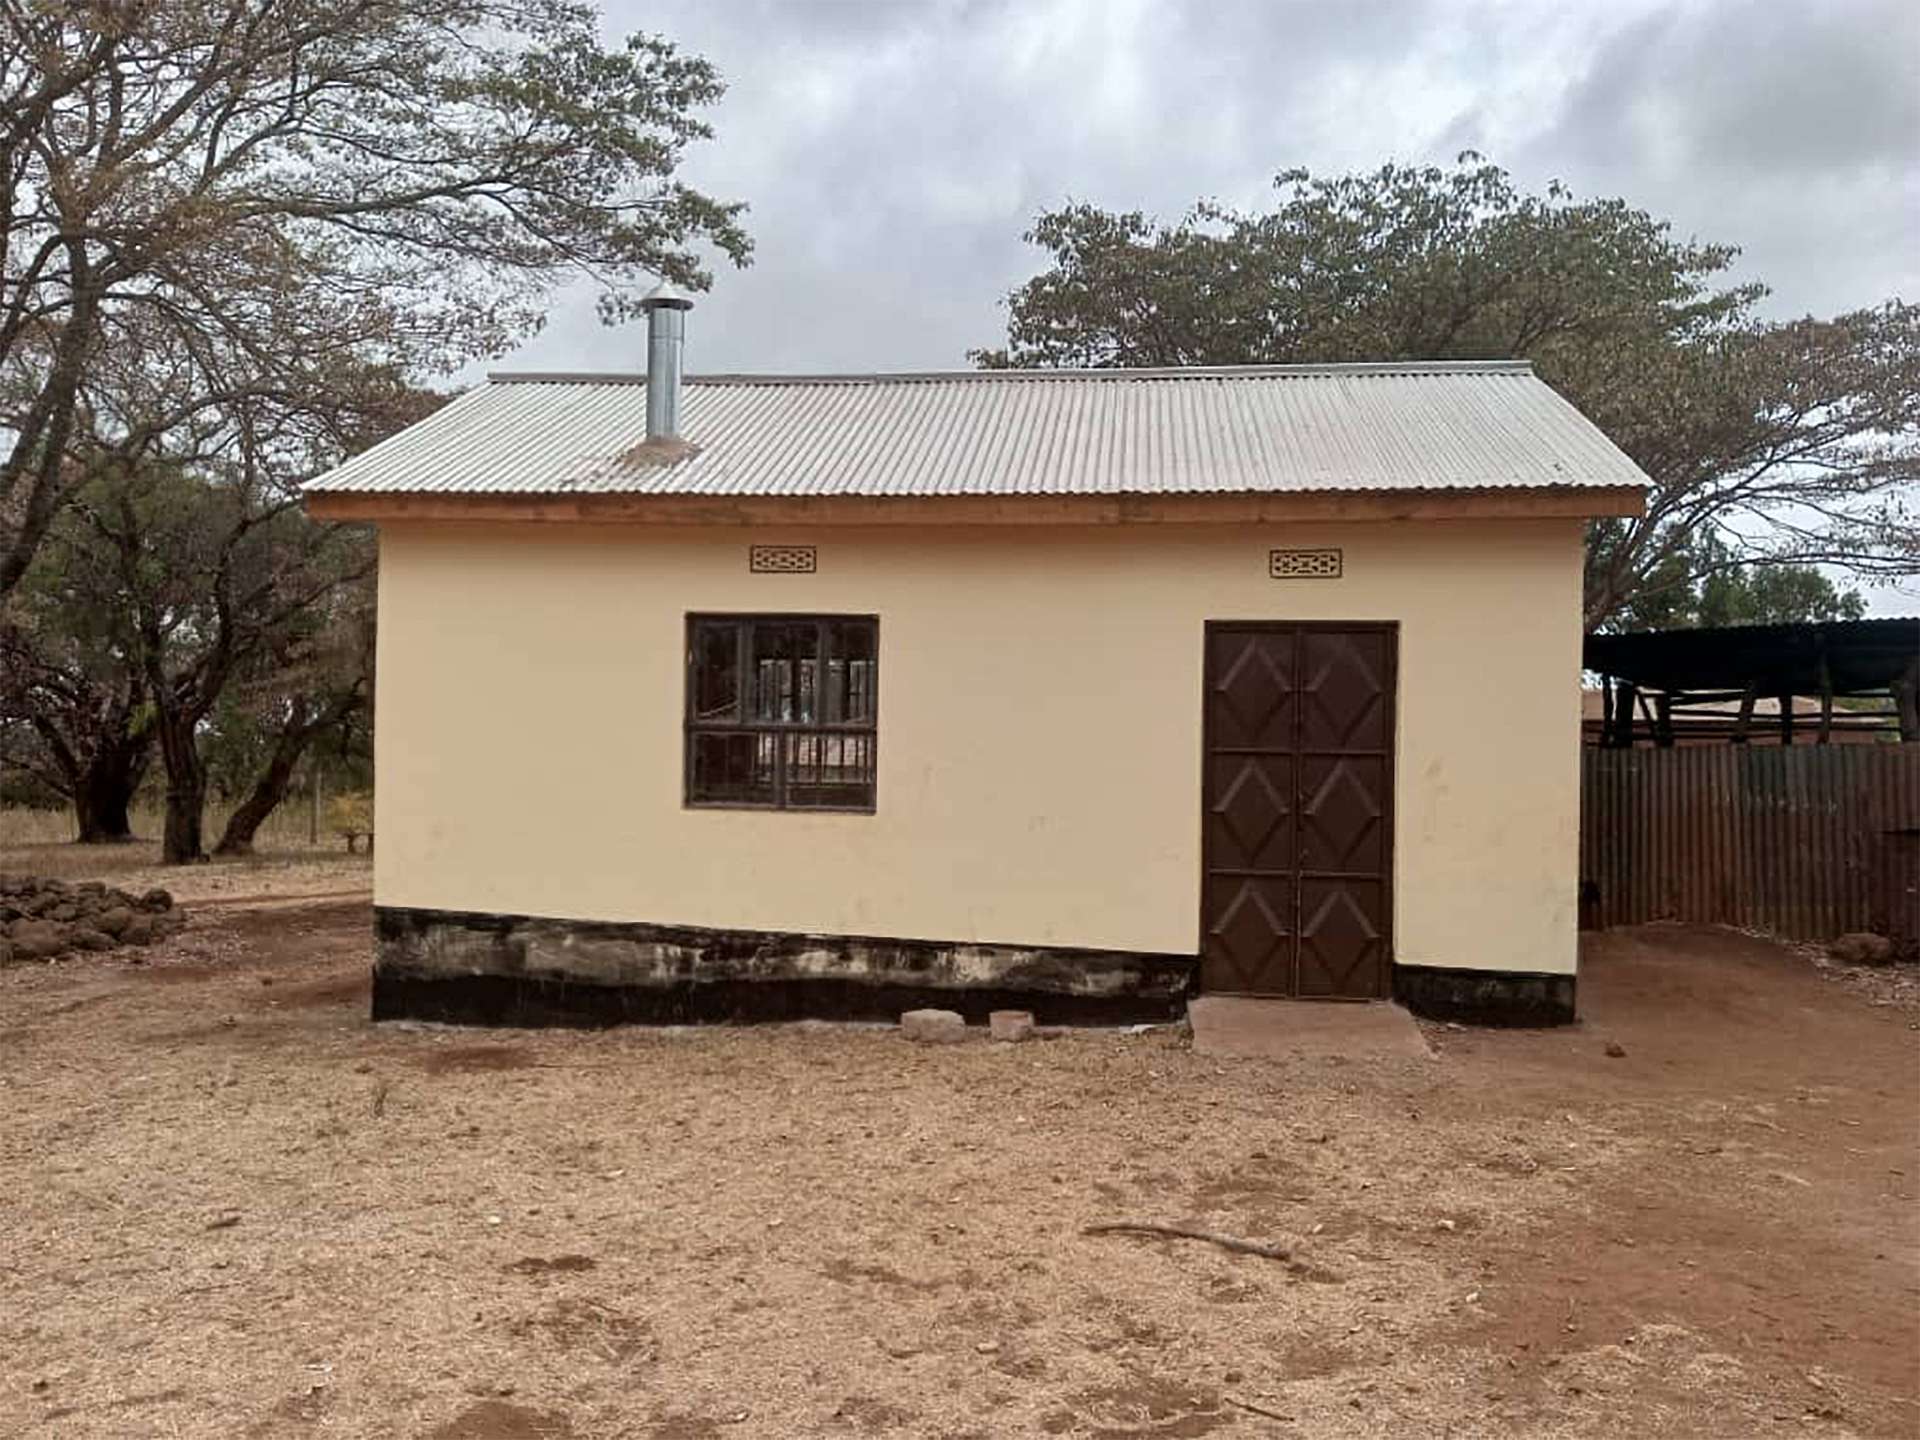 Construction site kitchen build for a school in Tanzania 